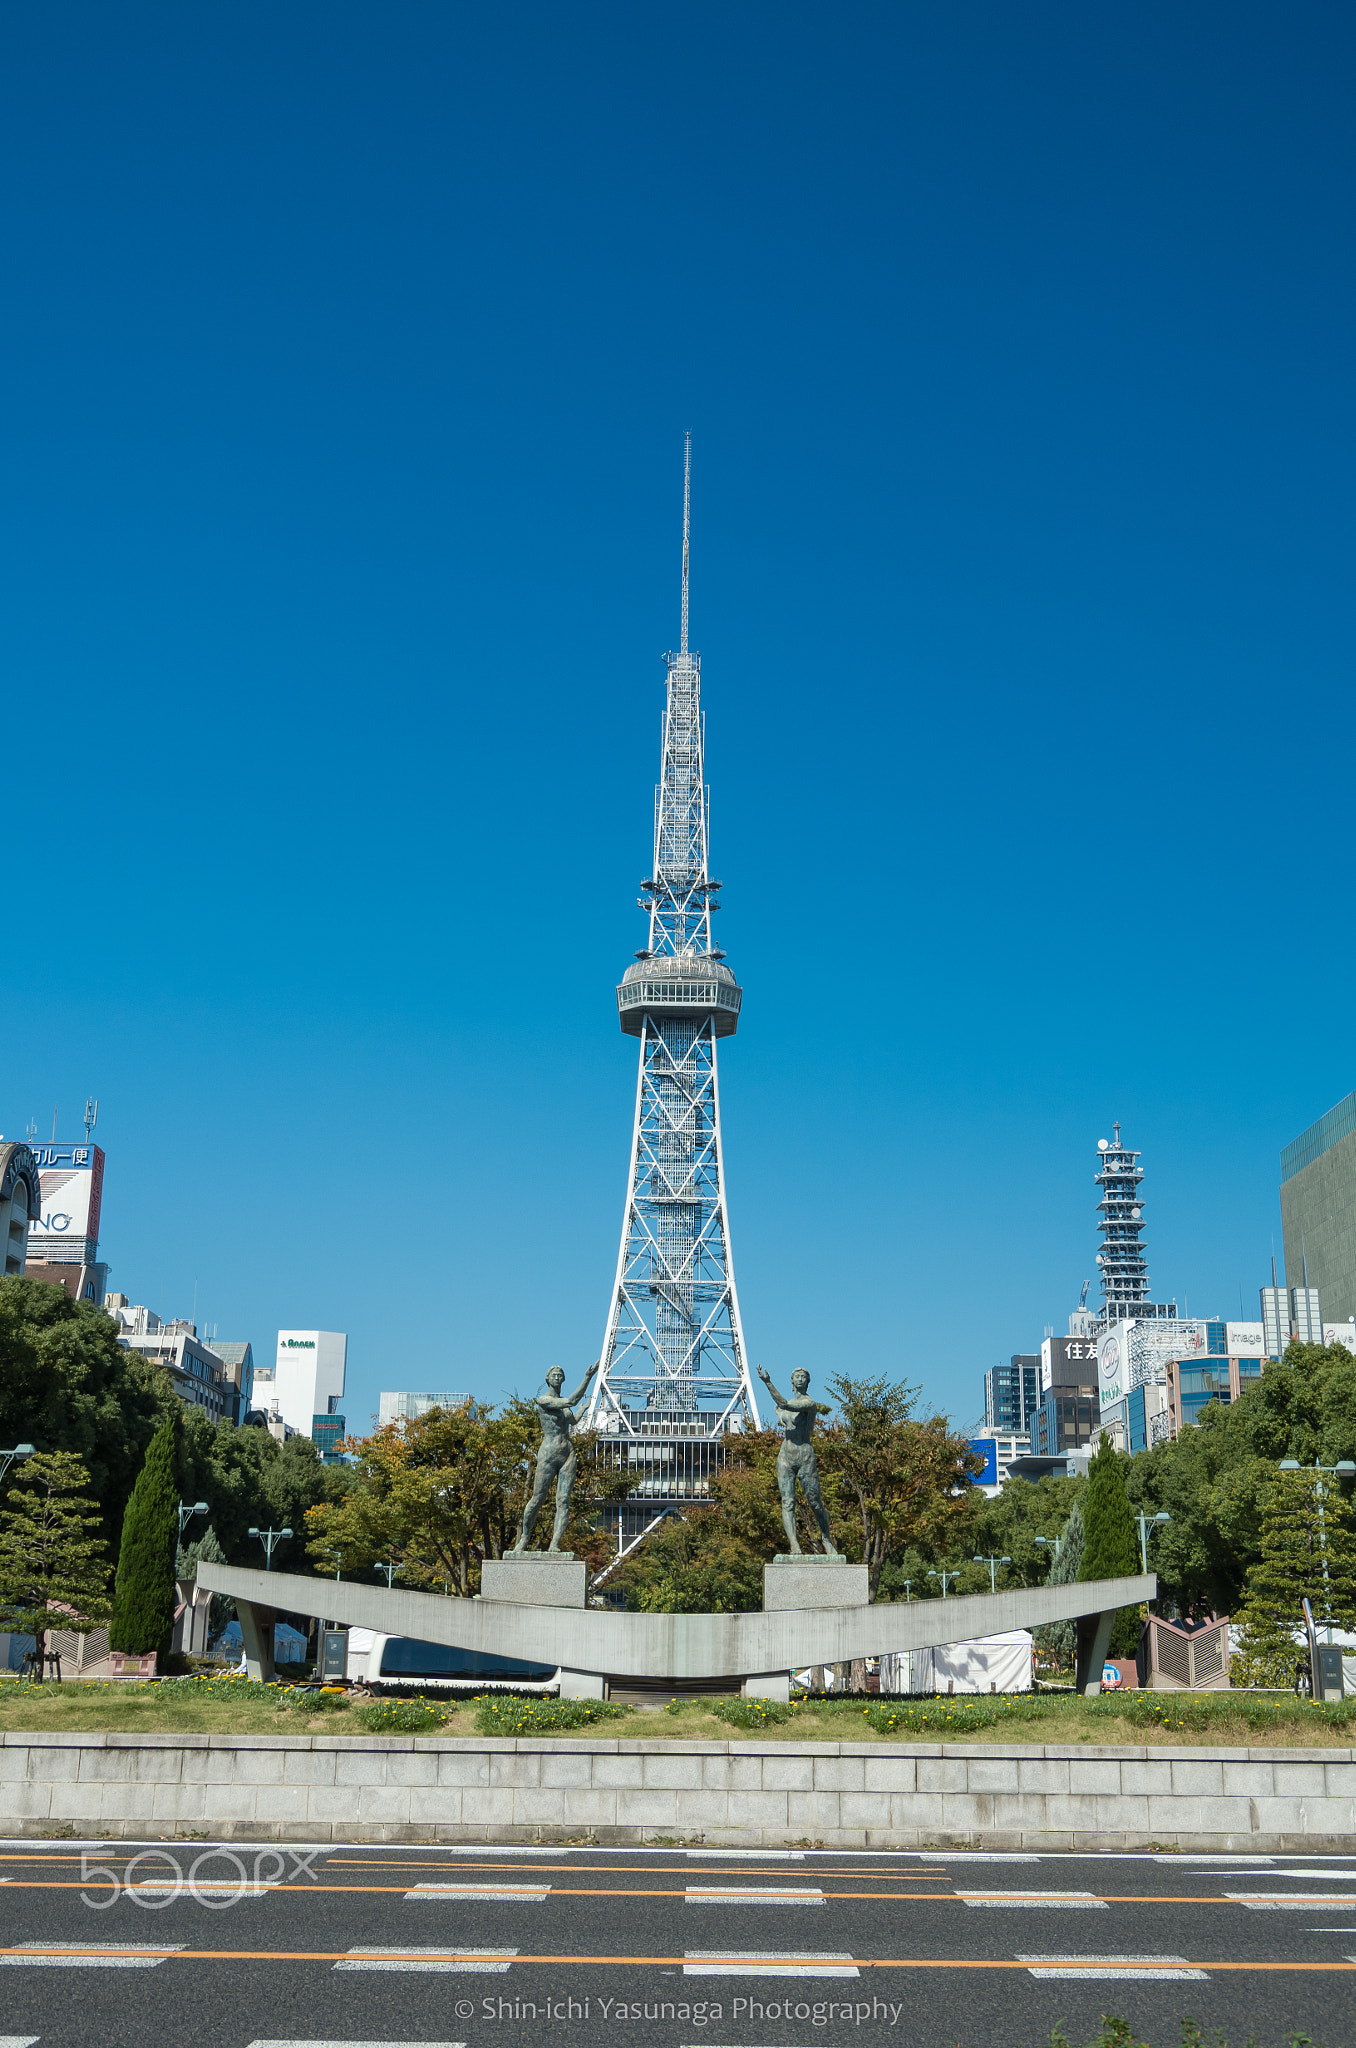 Nagoya TV Tower in Nagoya city,JAPAN.